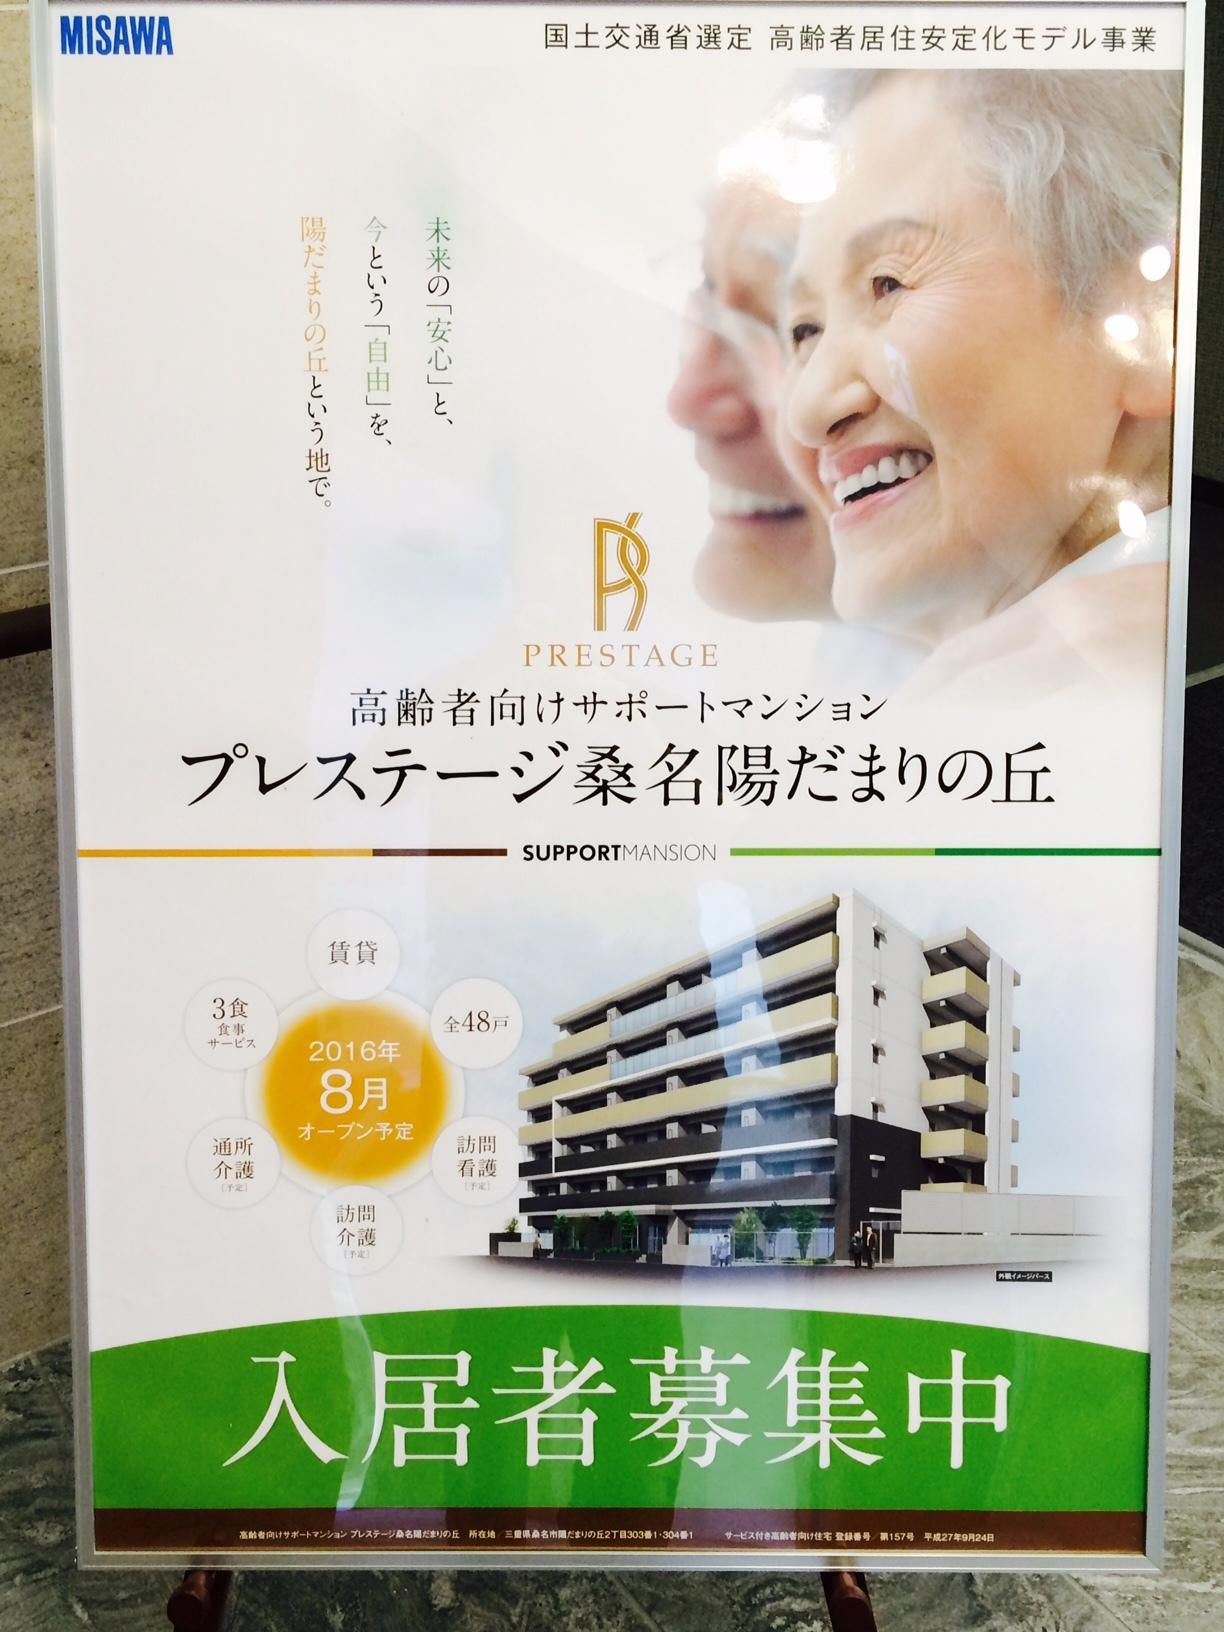 http://www.prestige-care-tokai.co.jp/information/images/BuPD5c_8b7.jpg